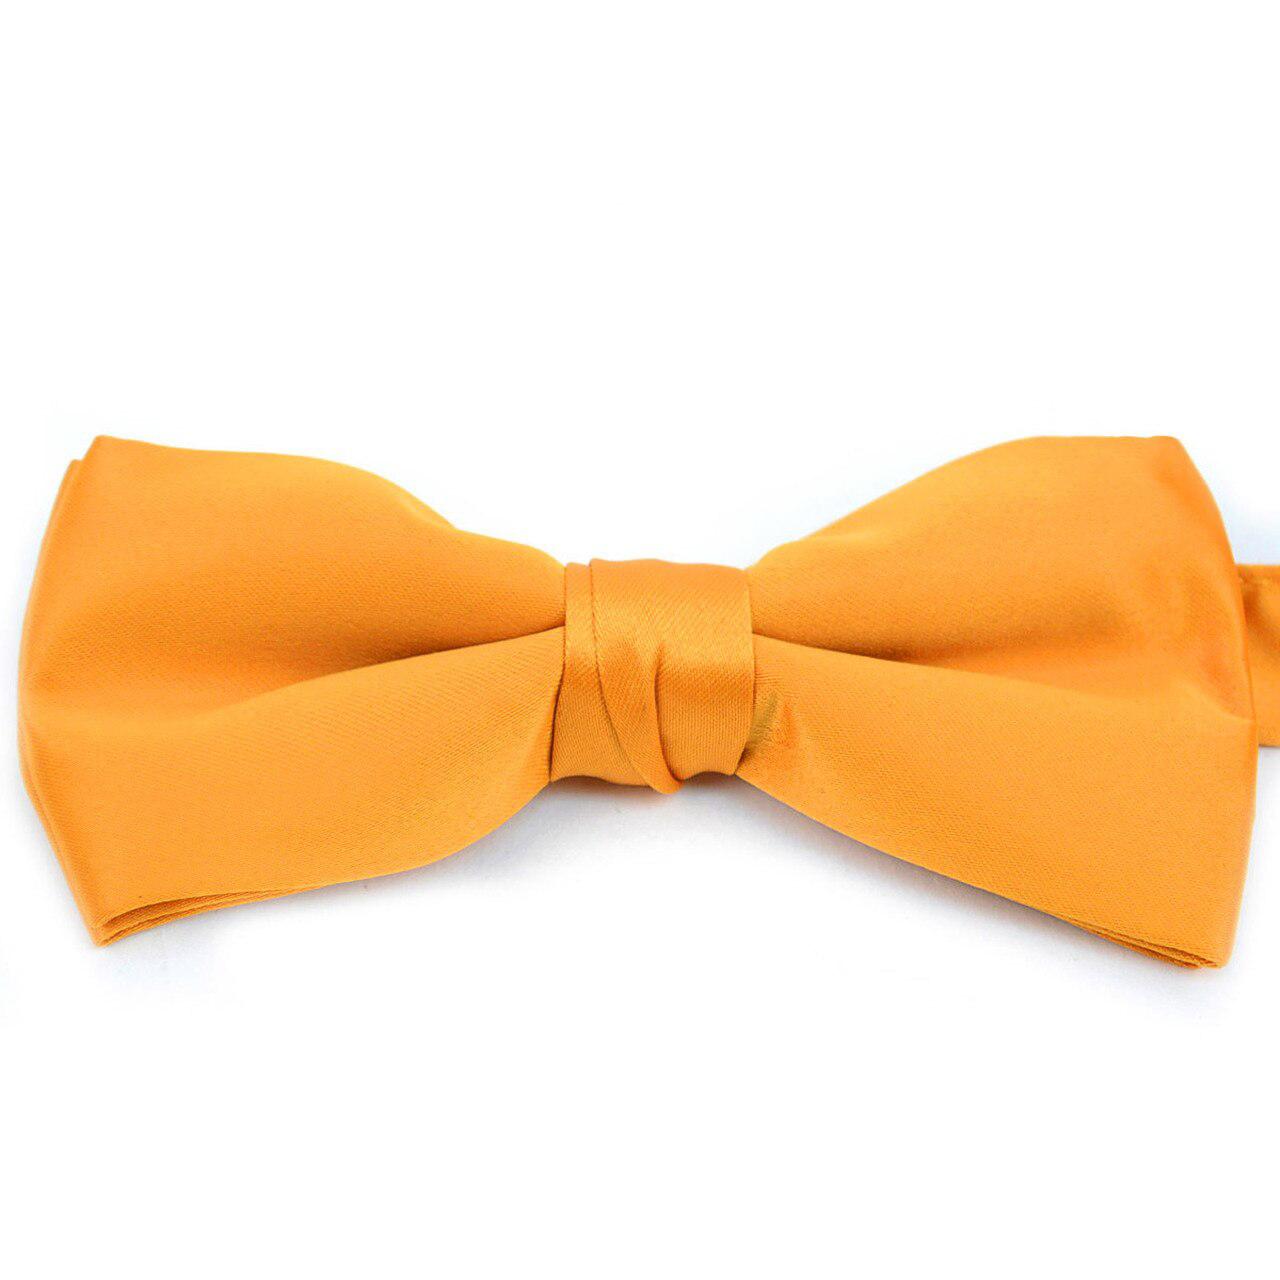  Solid Bow Tie Boxed - Orange